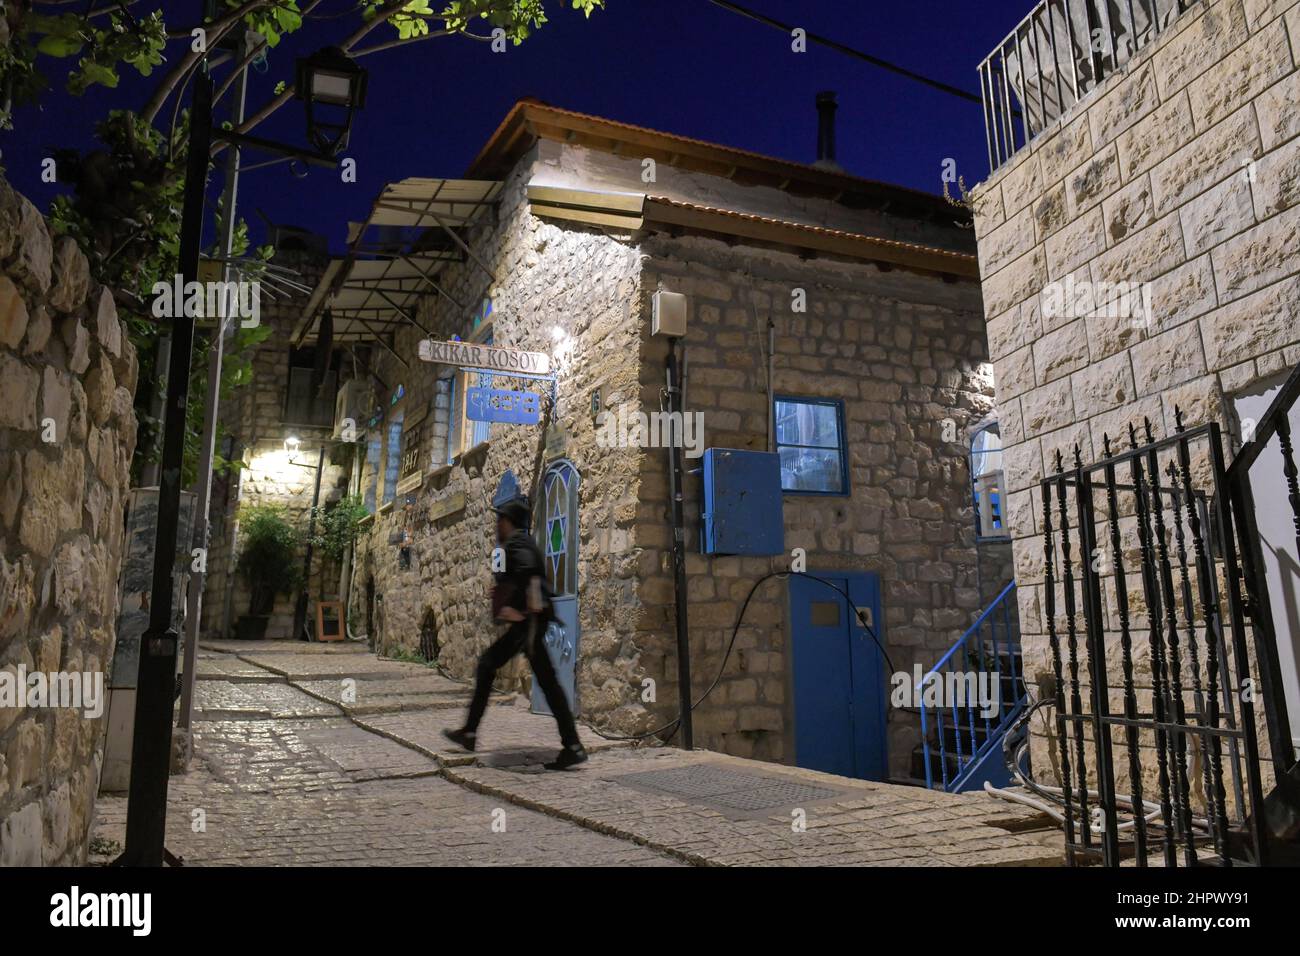 Passers-by, Kikar Kosov Synagogue, Old City Alley, Safed, Israel Stock Photo